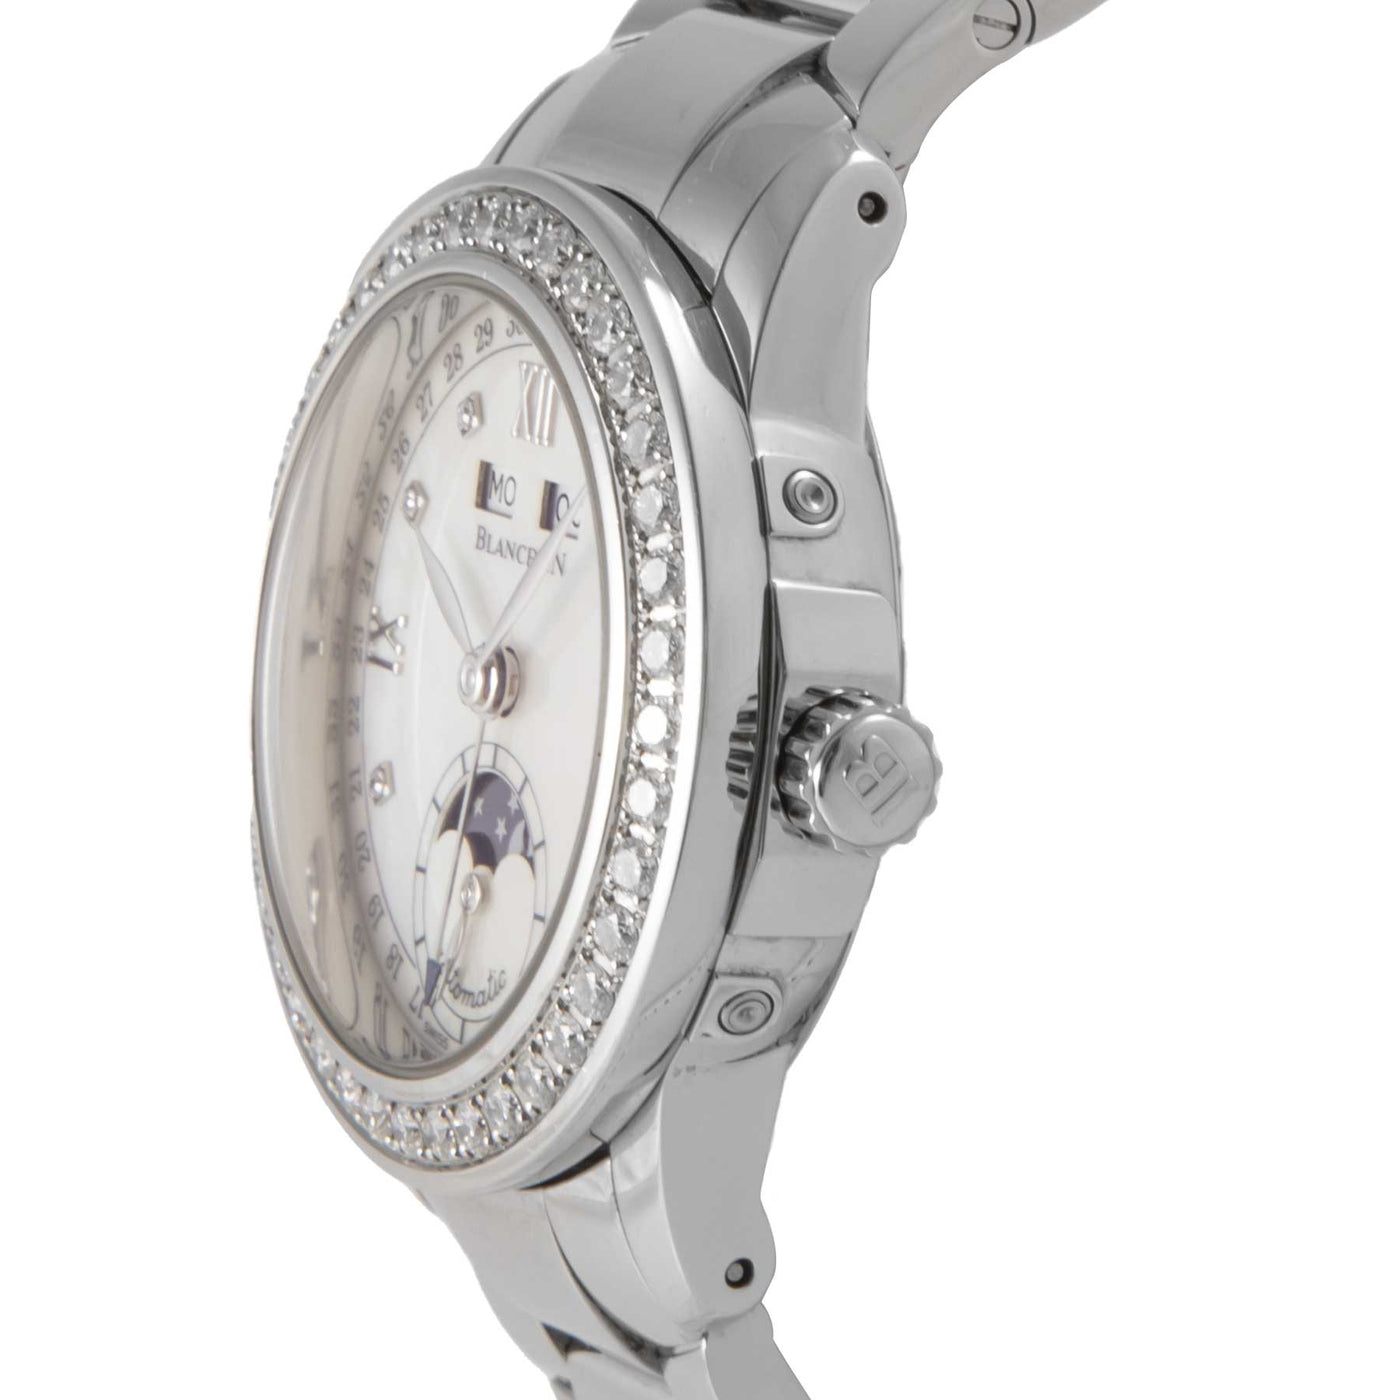 Blancpain Ladybird Quantieme Complete calendar 236 4692A 71A - Timepiece360